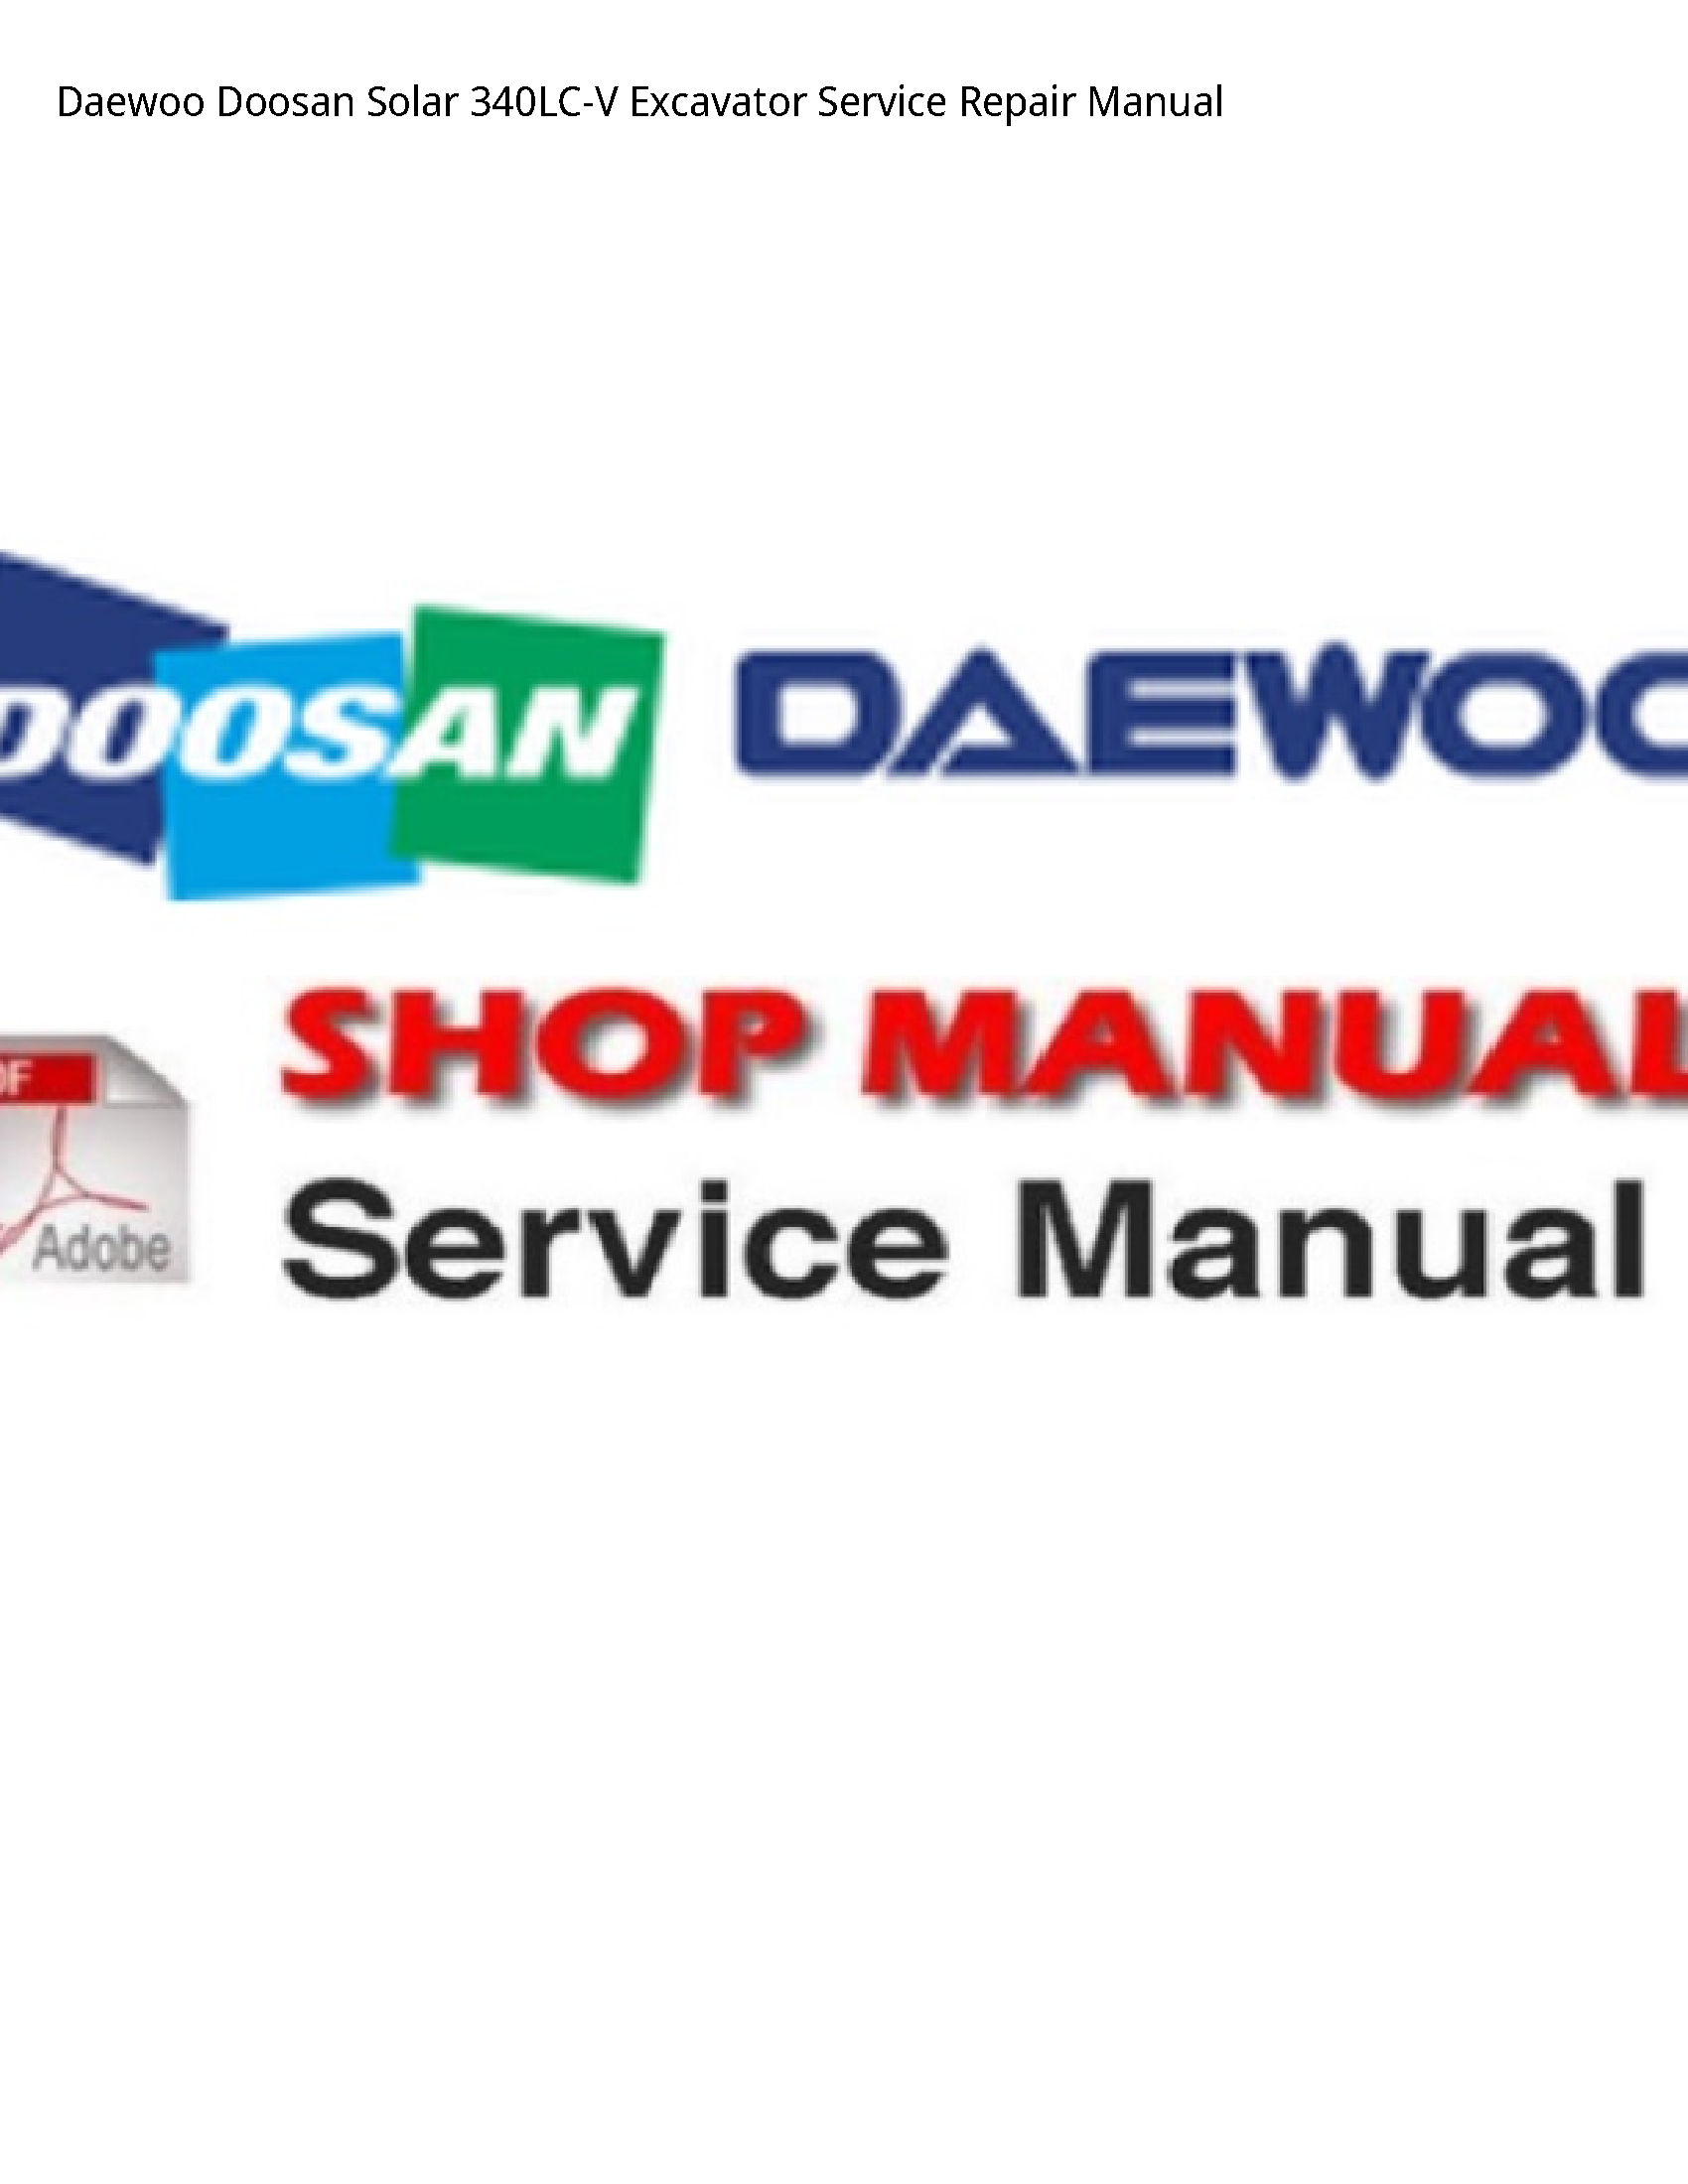 Daewoo Doosan 340LC-V Solar Excavator manual